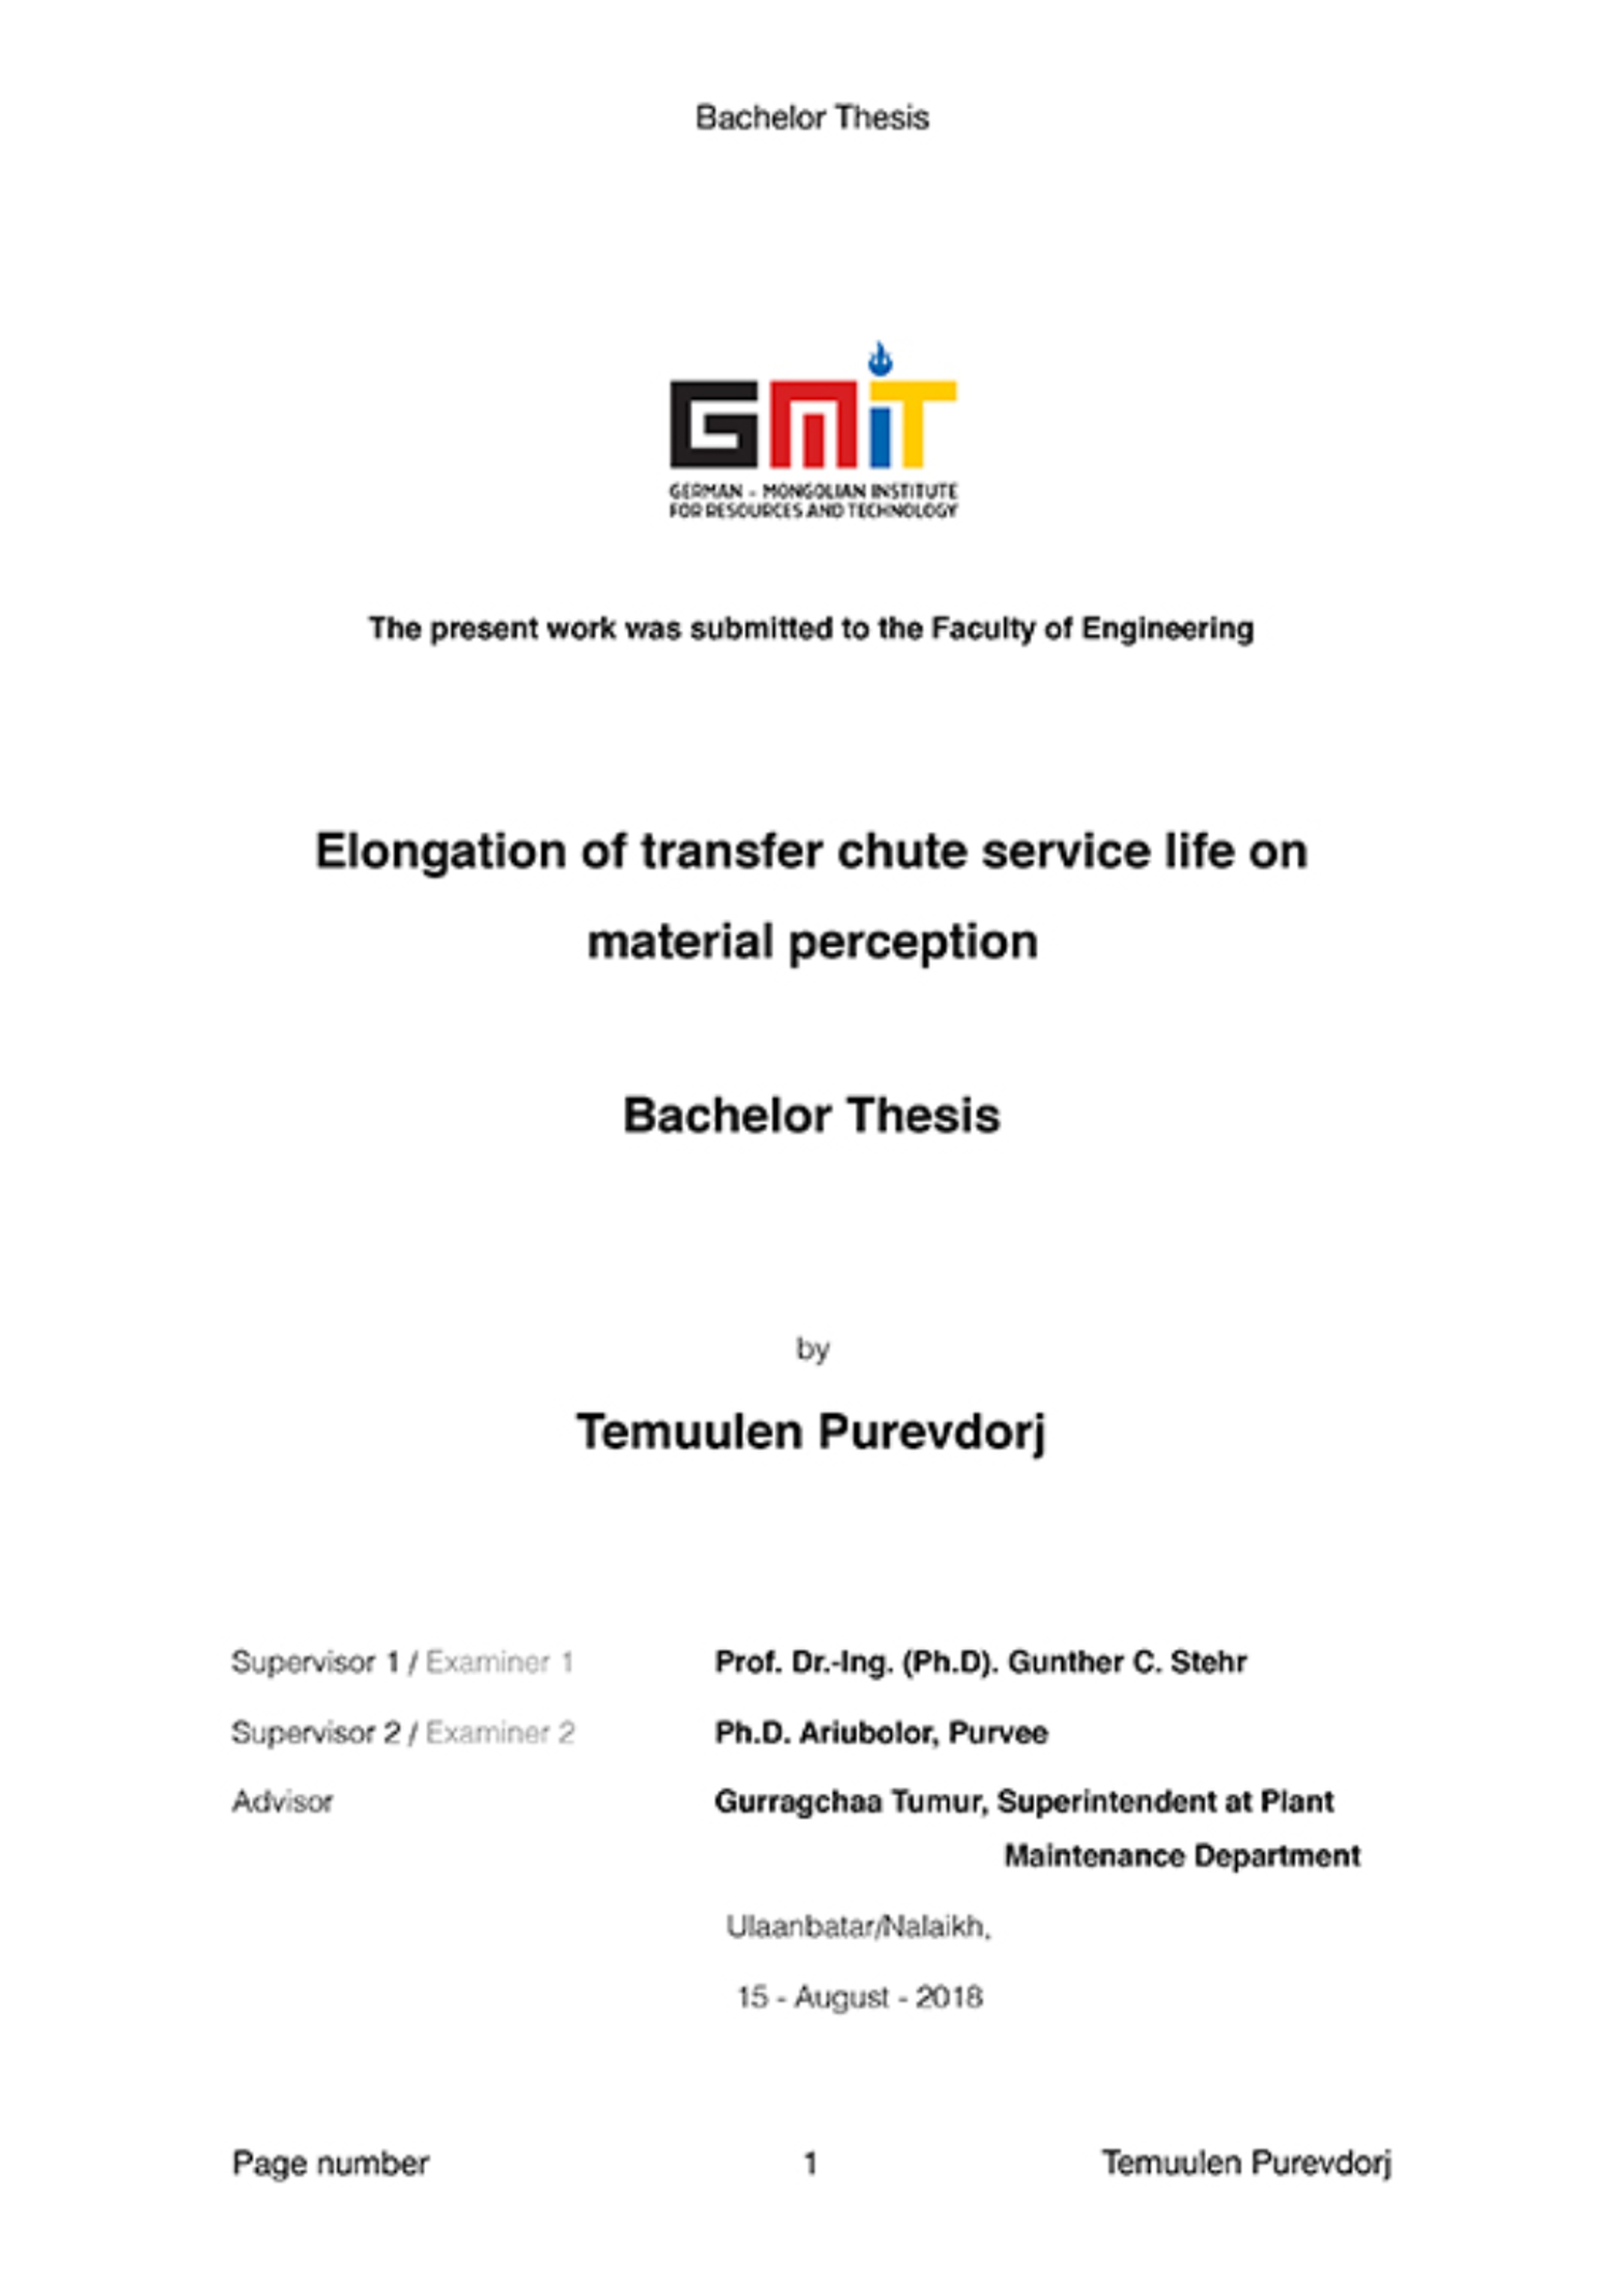 Elongation of transfer chute service life on material perception